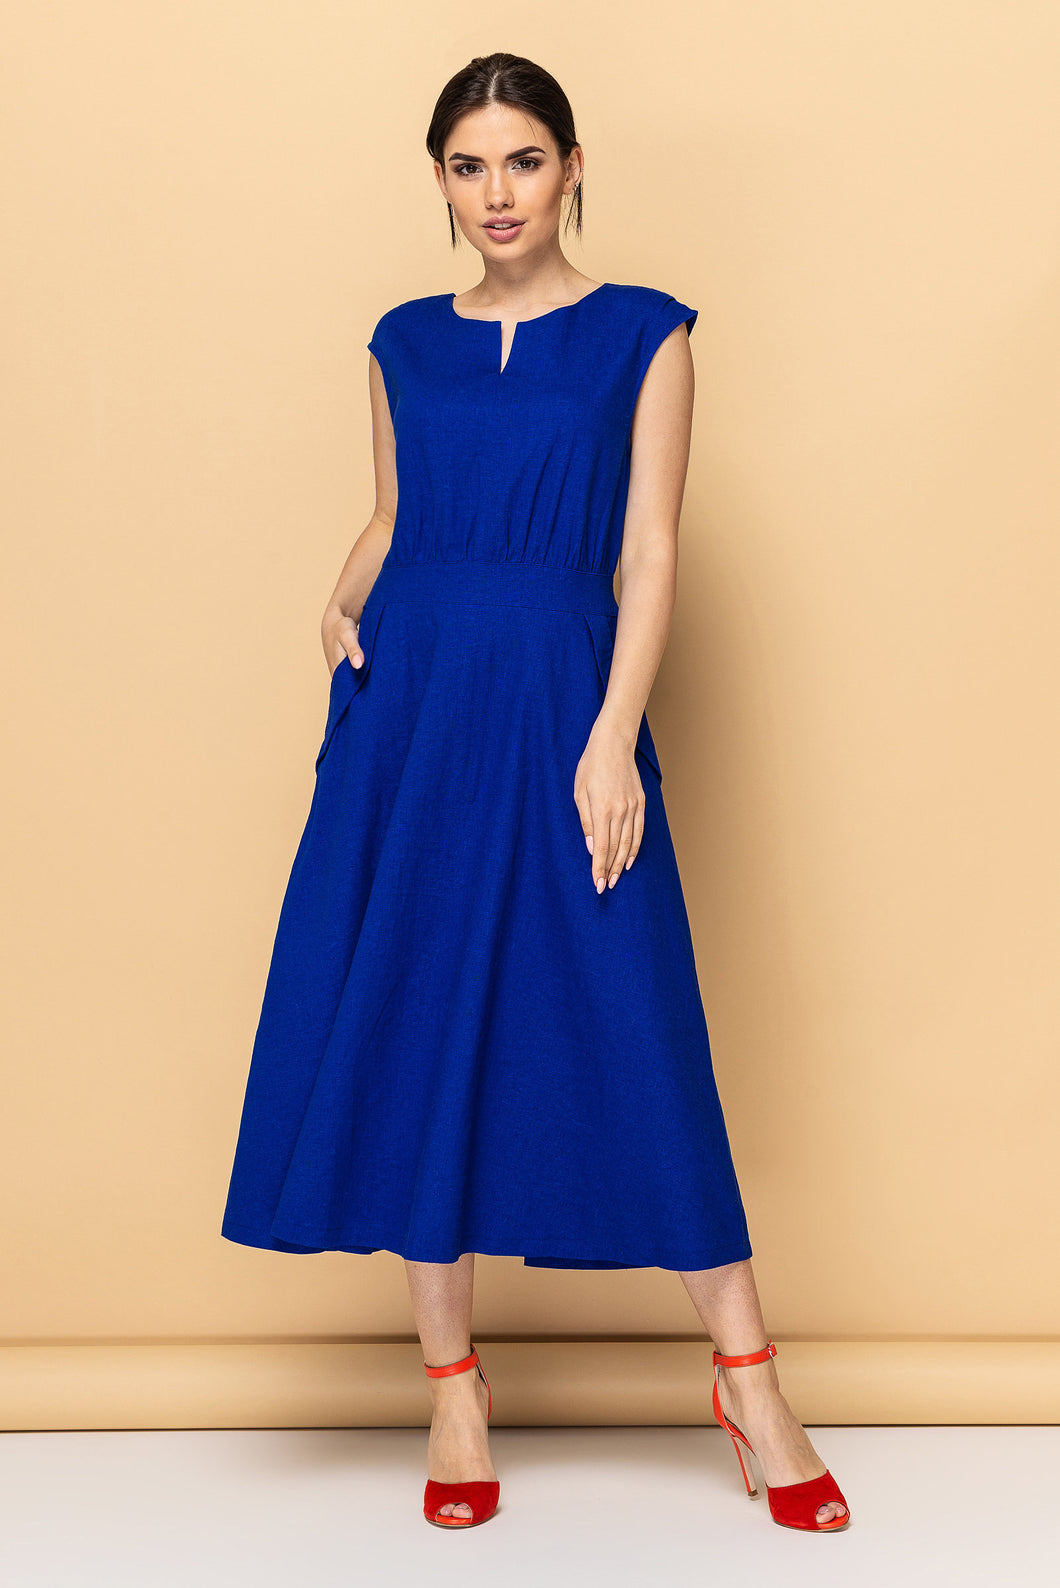 Blue Linen Dress with pockets